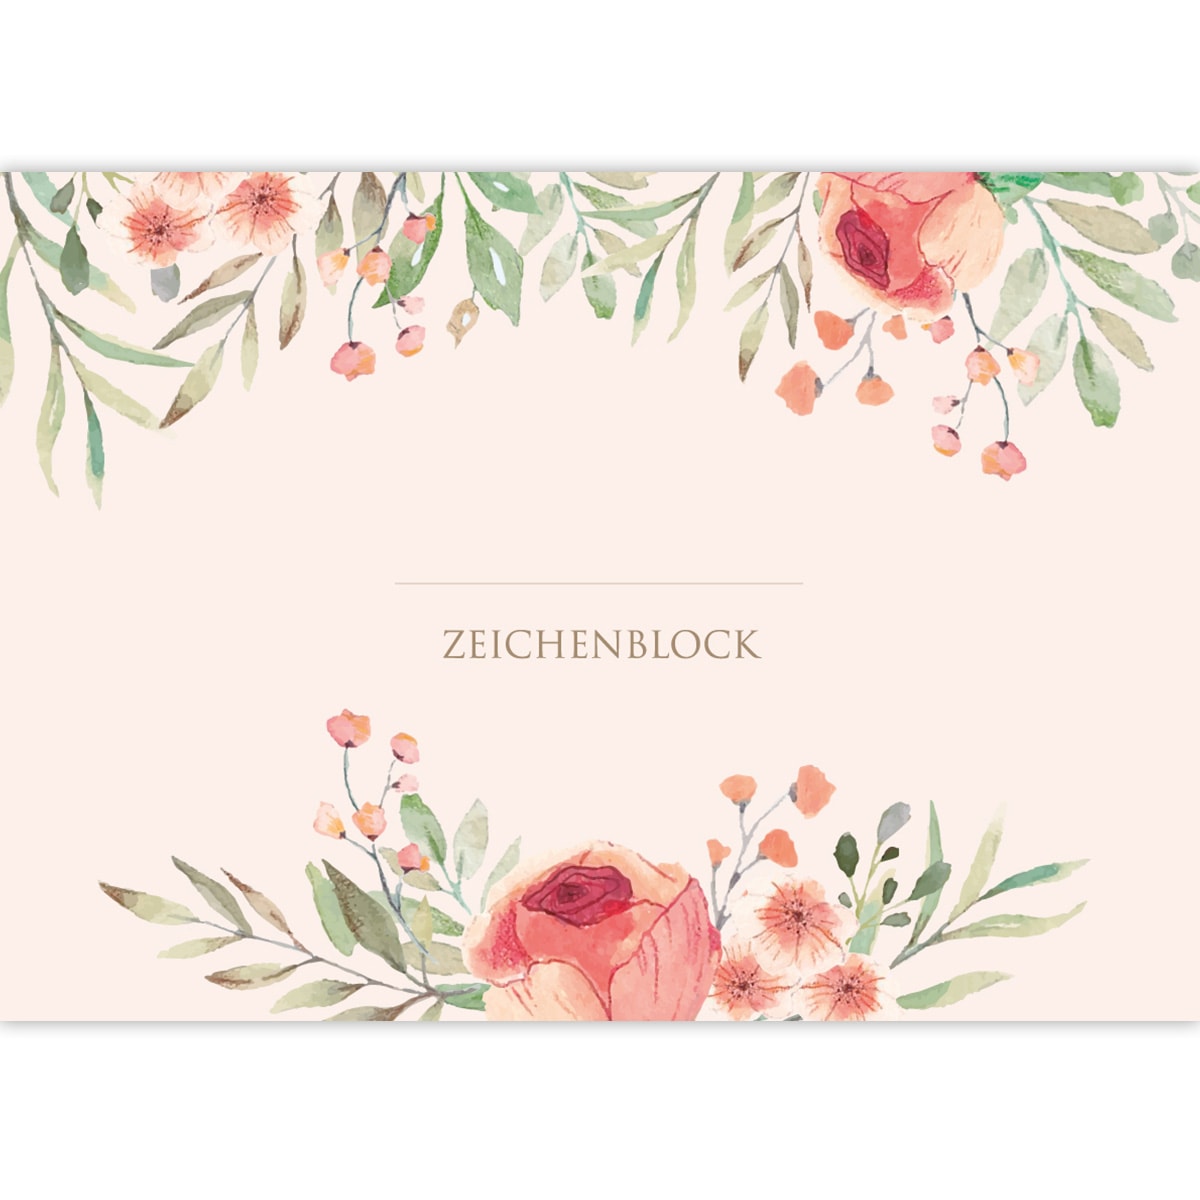 Kartenkaufrausch: Floraler DIN A3 Malblock aus unserer Malblock Papeterie in rosa